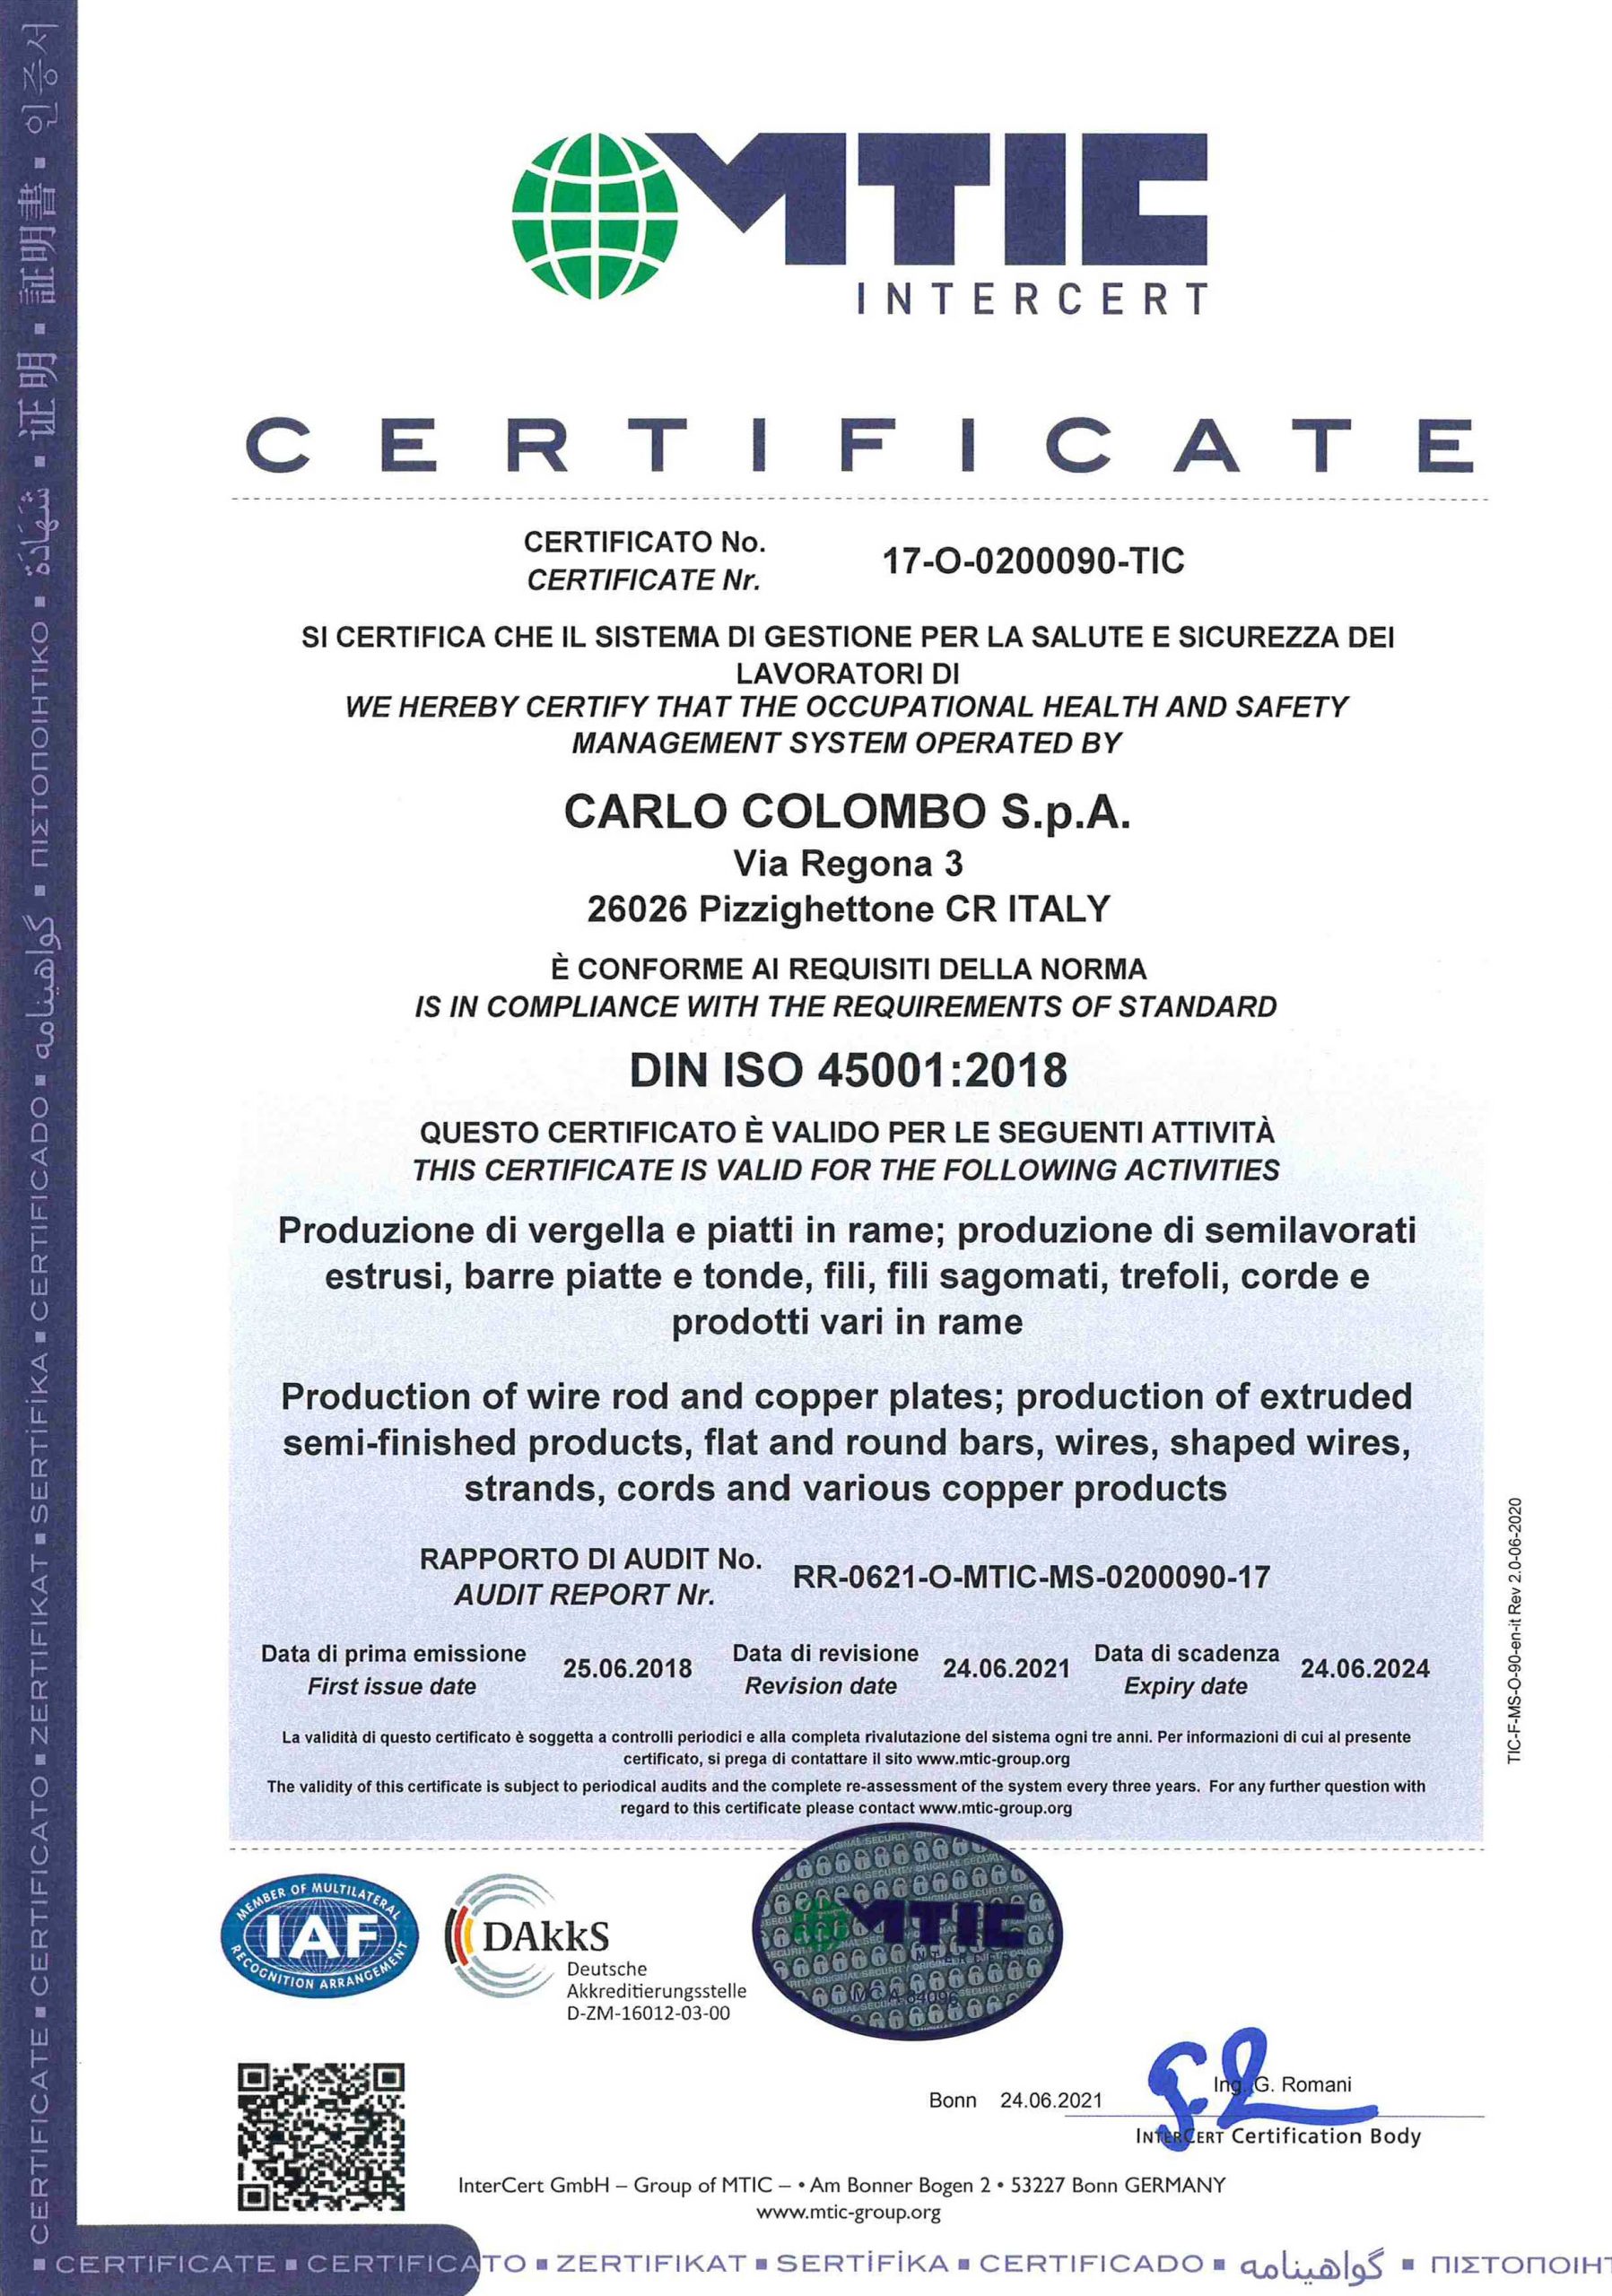 DIN ISO 45001:2018